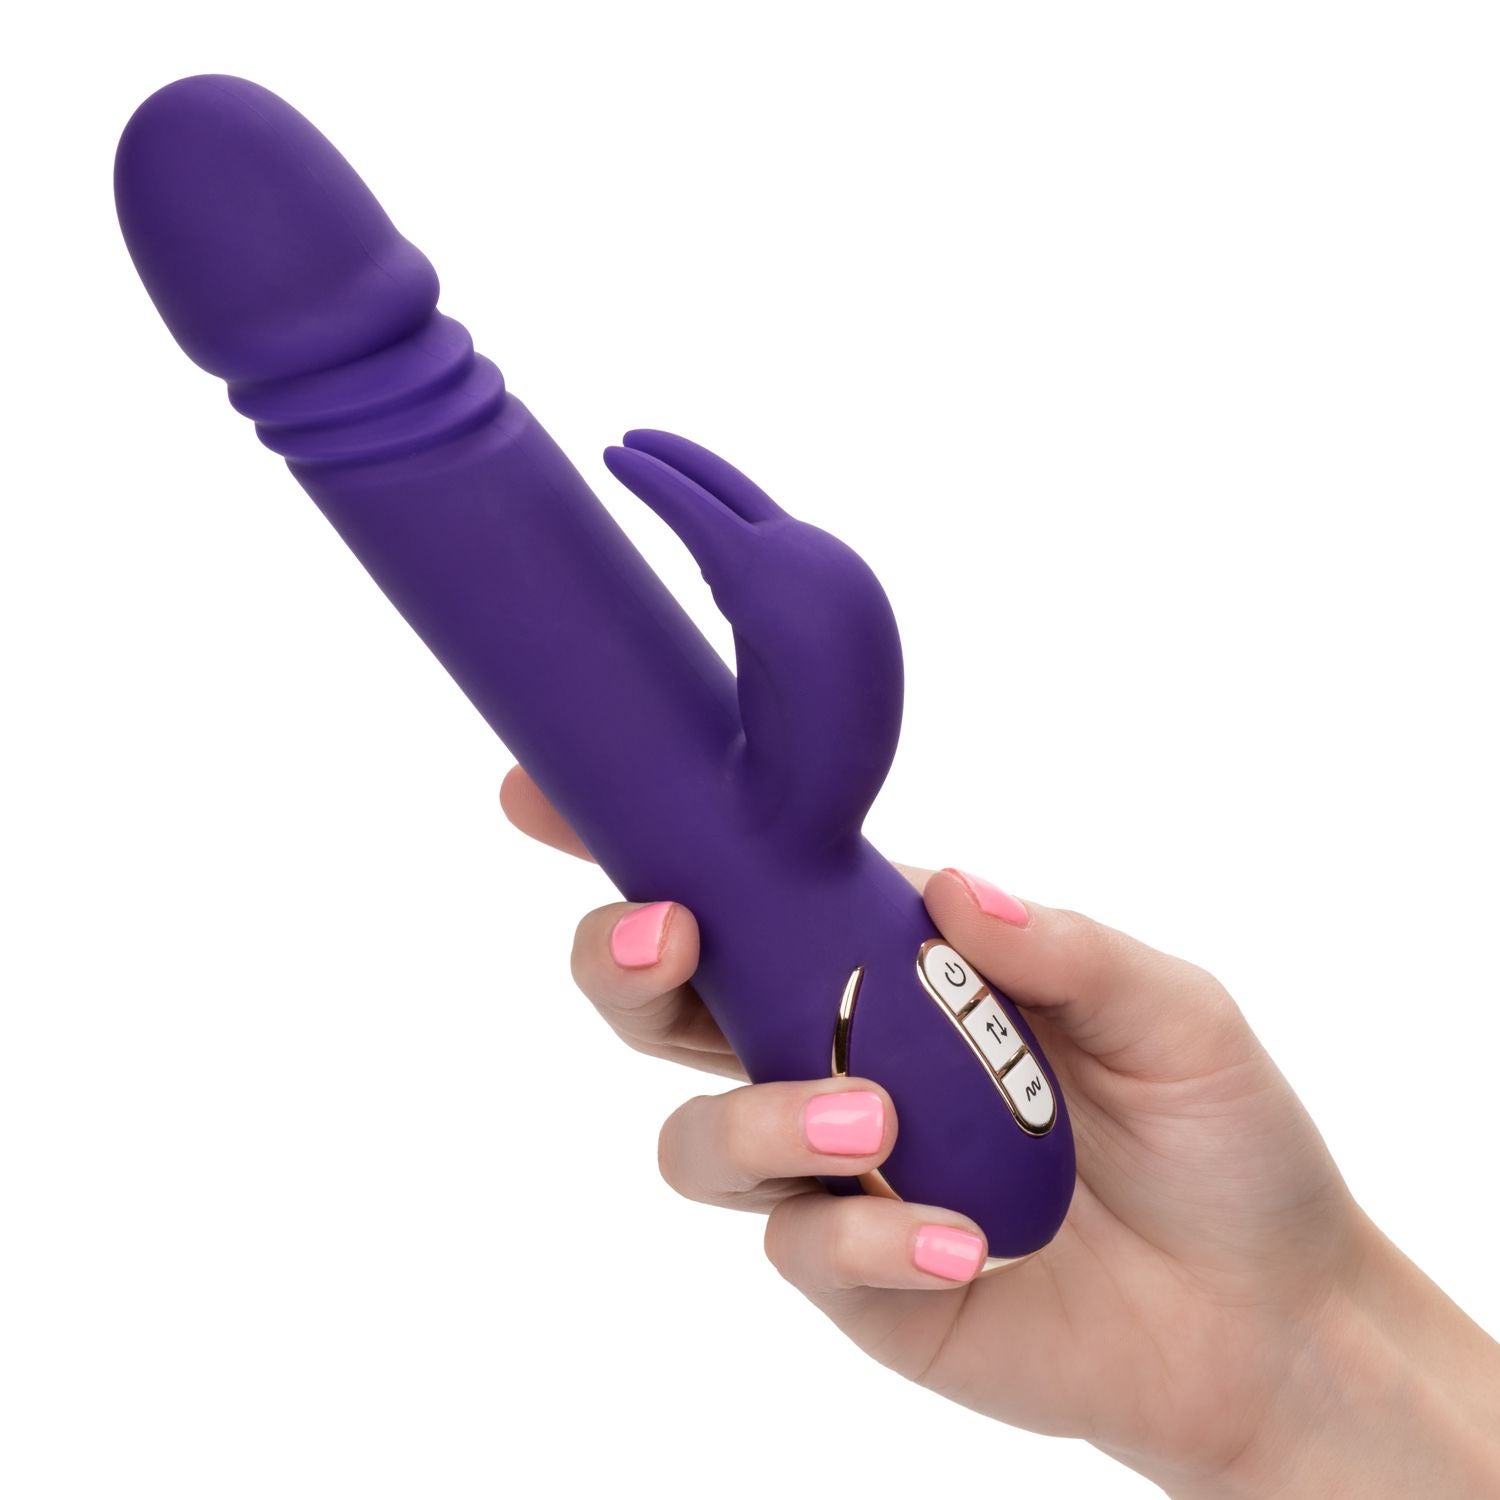 Model holding purple thrusting rabbit vibrator